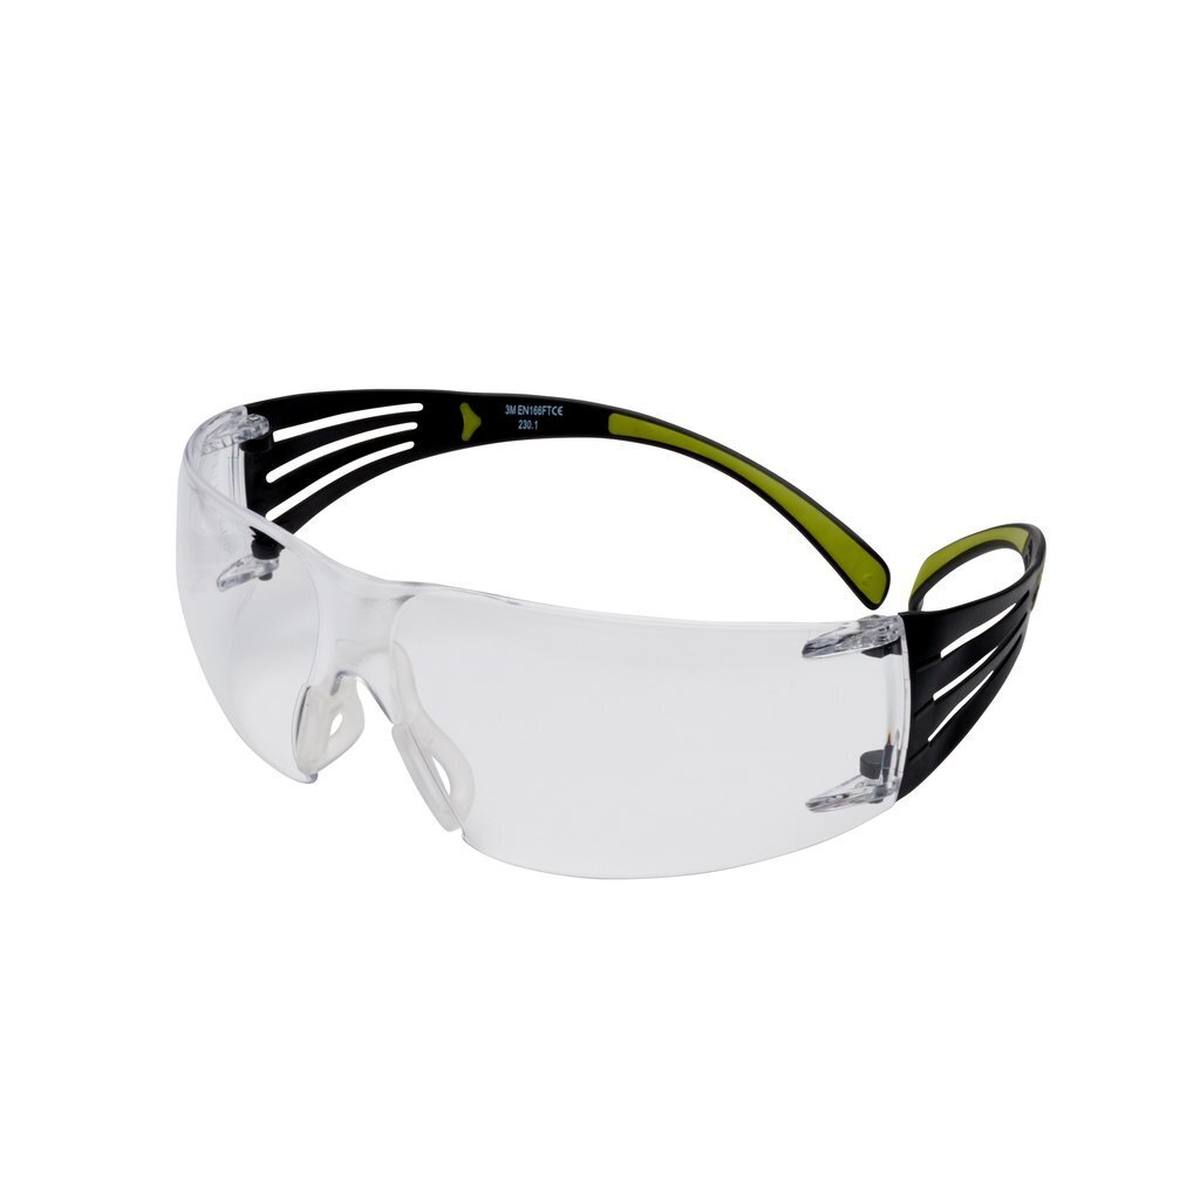 3M Gafas de protección SecureFit 400, patillas negras/verdes, tratamiento antirrayas/antivaho, lentes transparentes, SF401AS/AF-EU